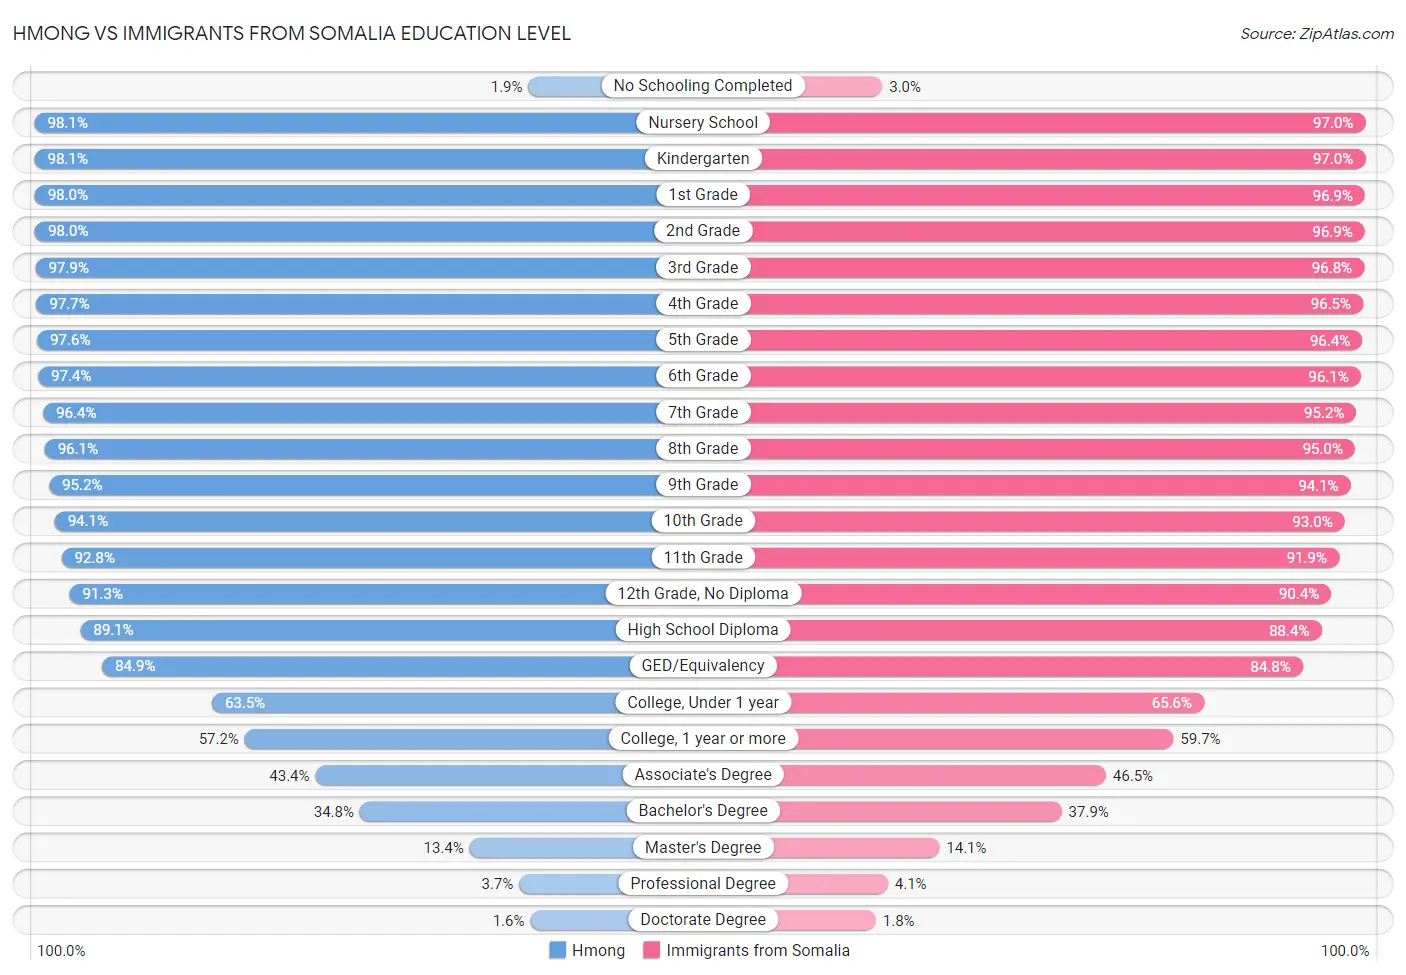 Hmong vs Immigrants from Somalia Education Level